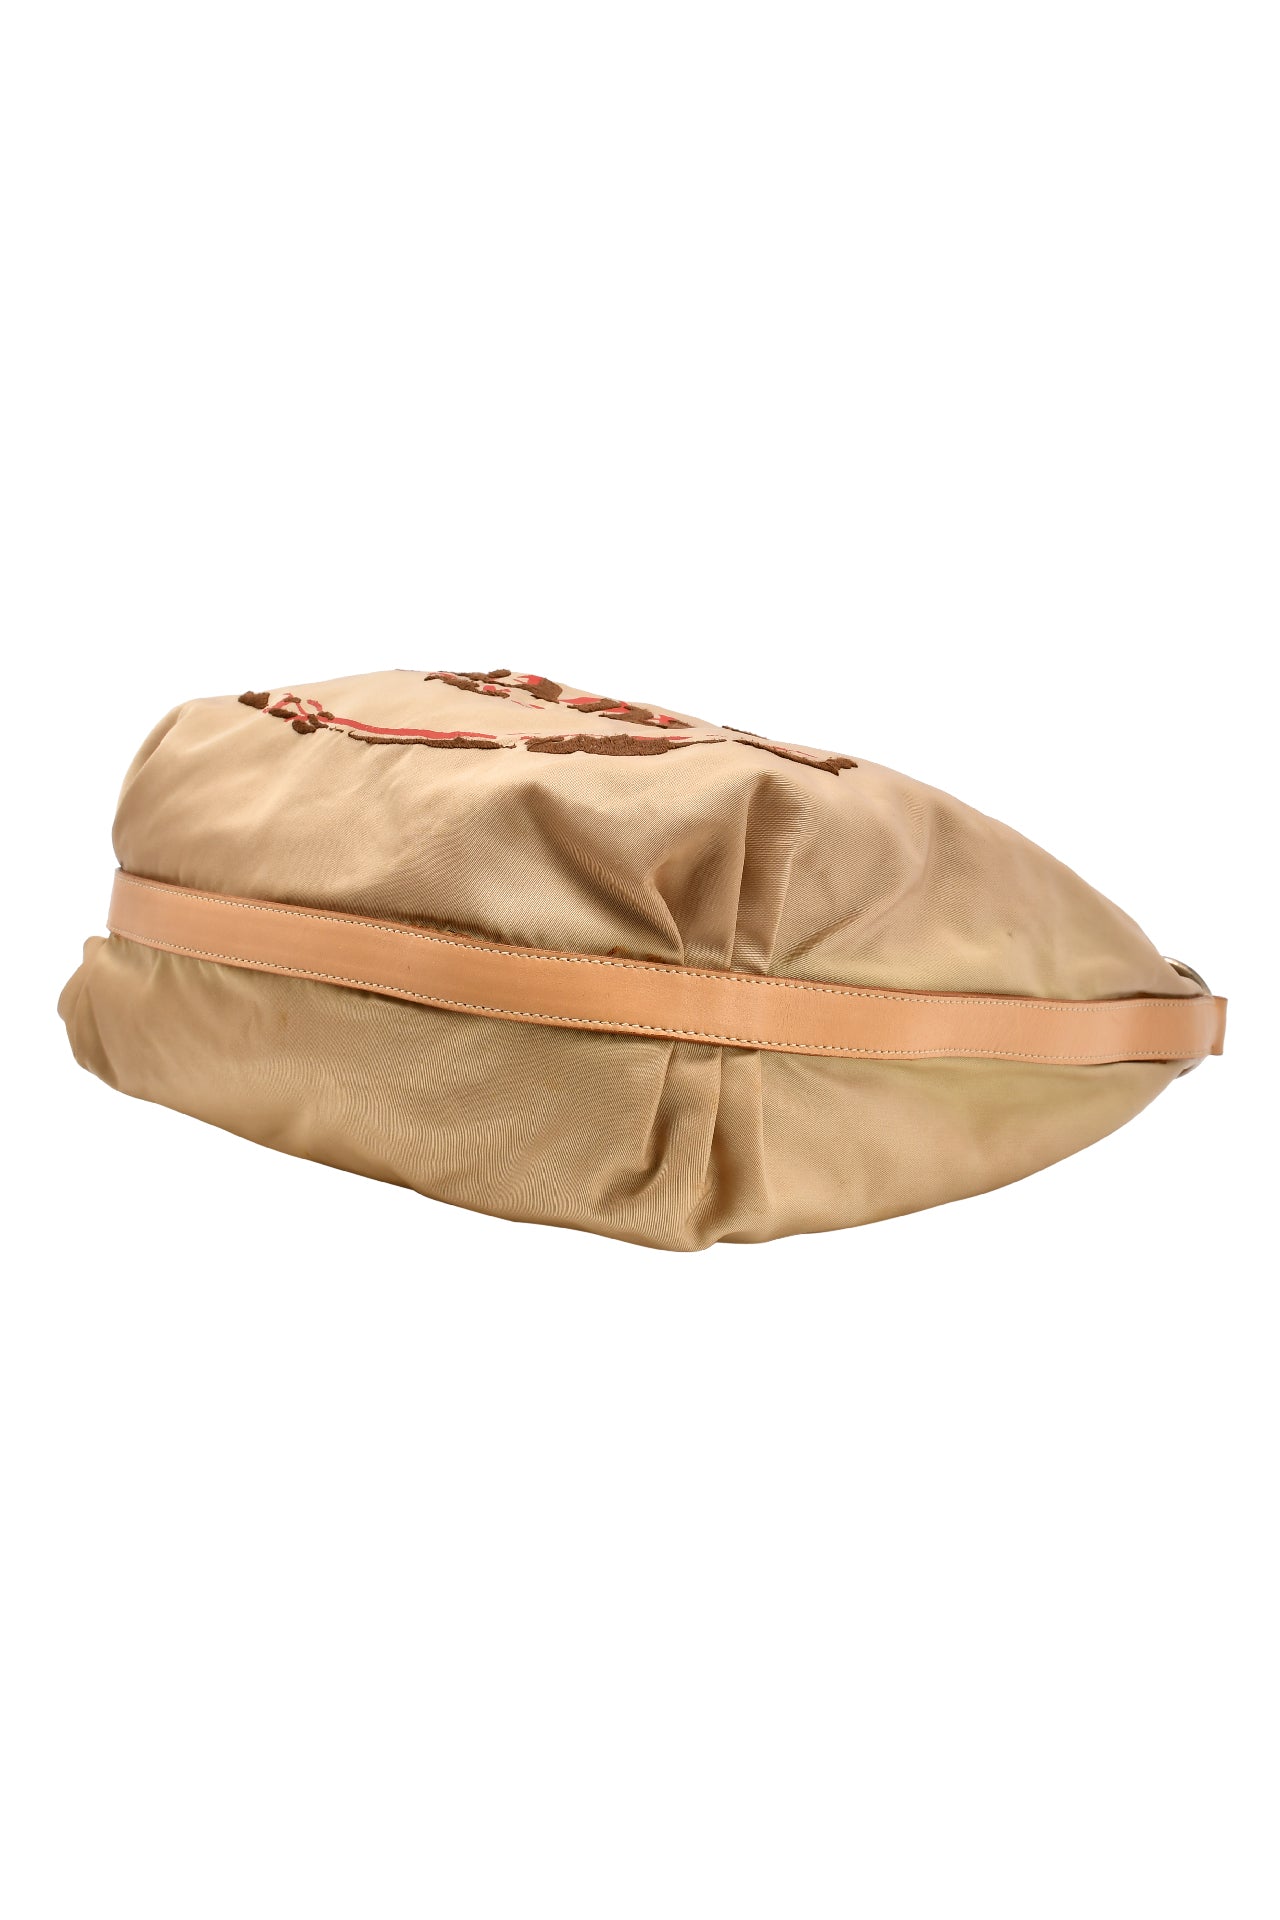 Prada Brown Canapa Tessuto Hobo Bag Beige